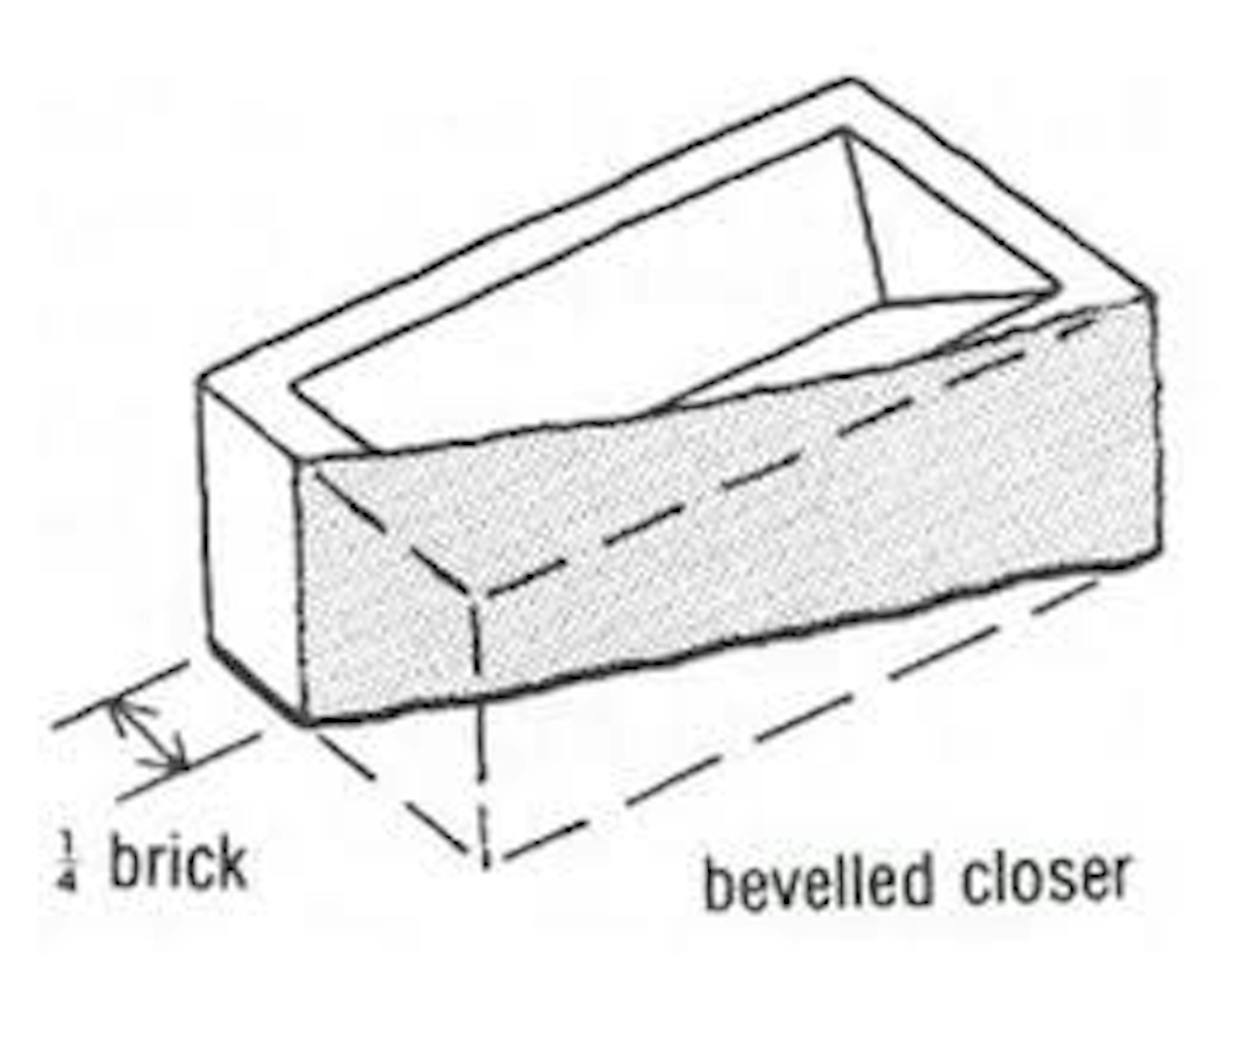 Explain in detail about closer bricks?